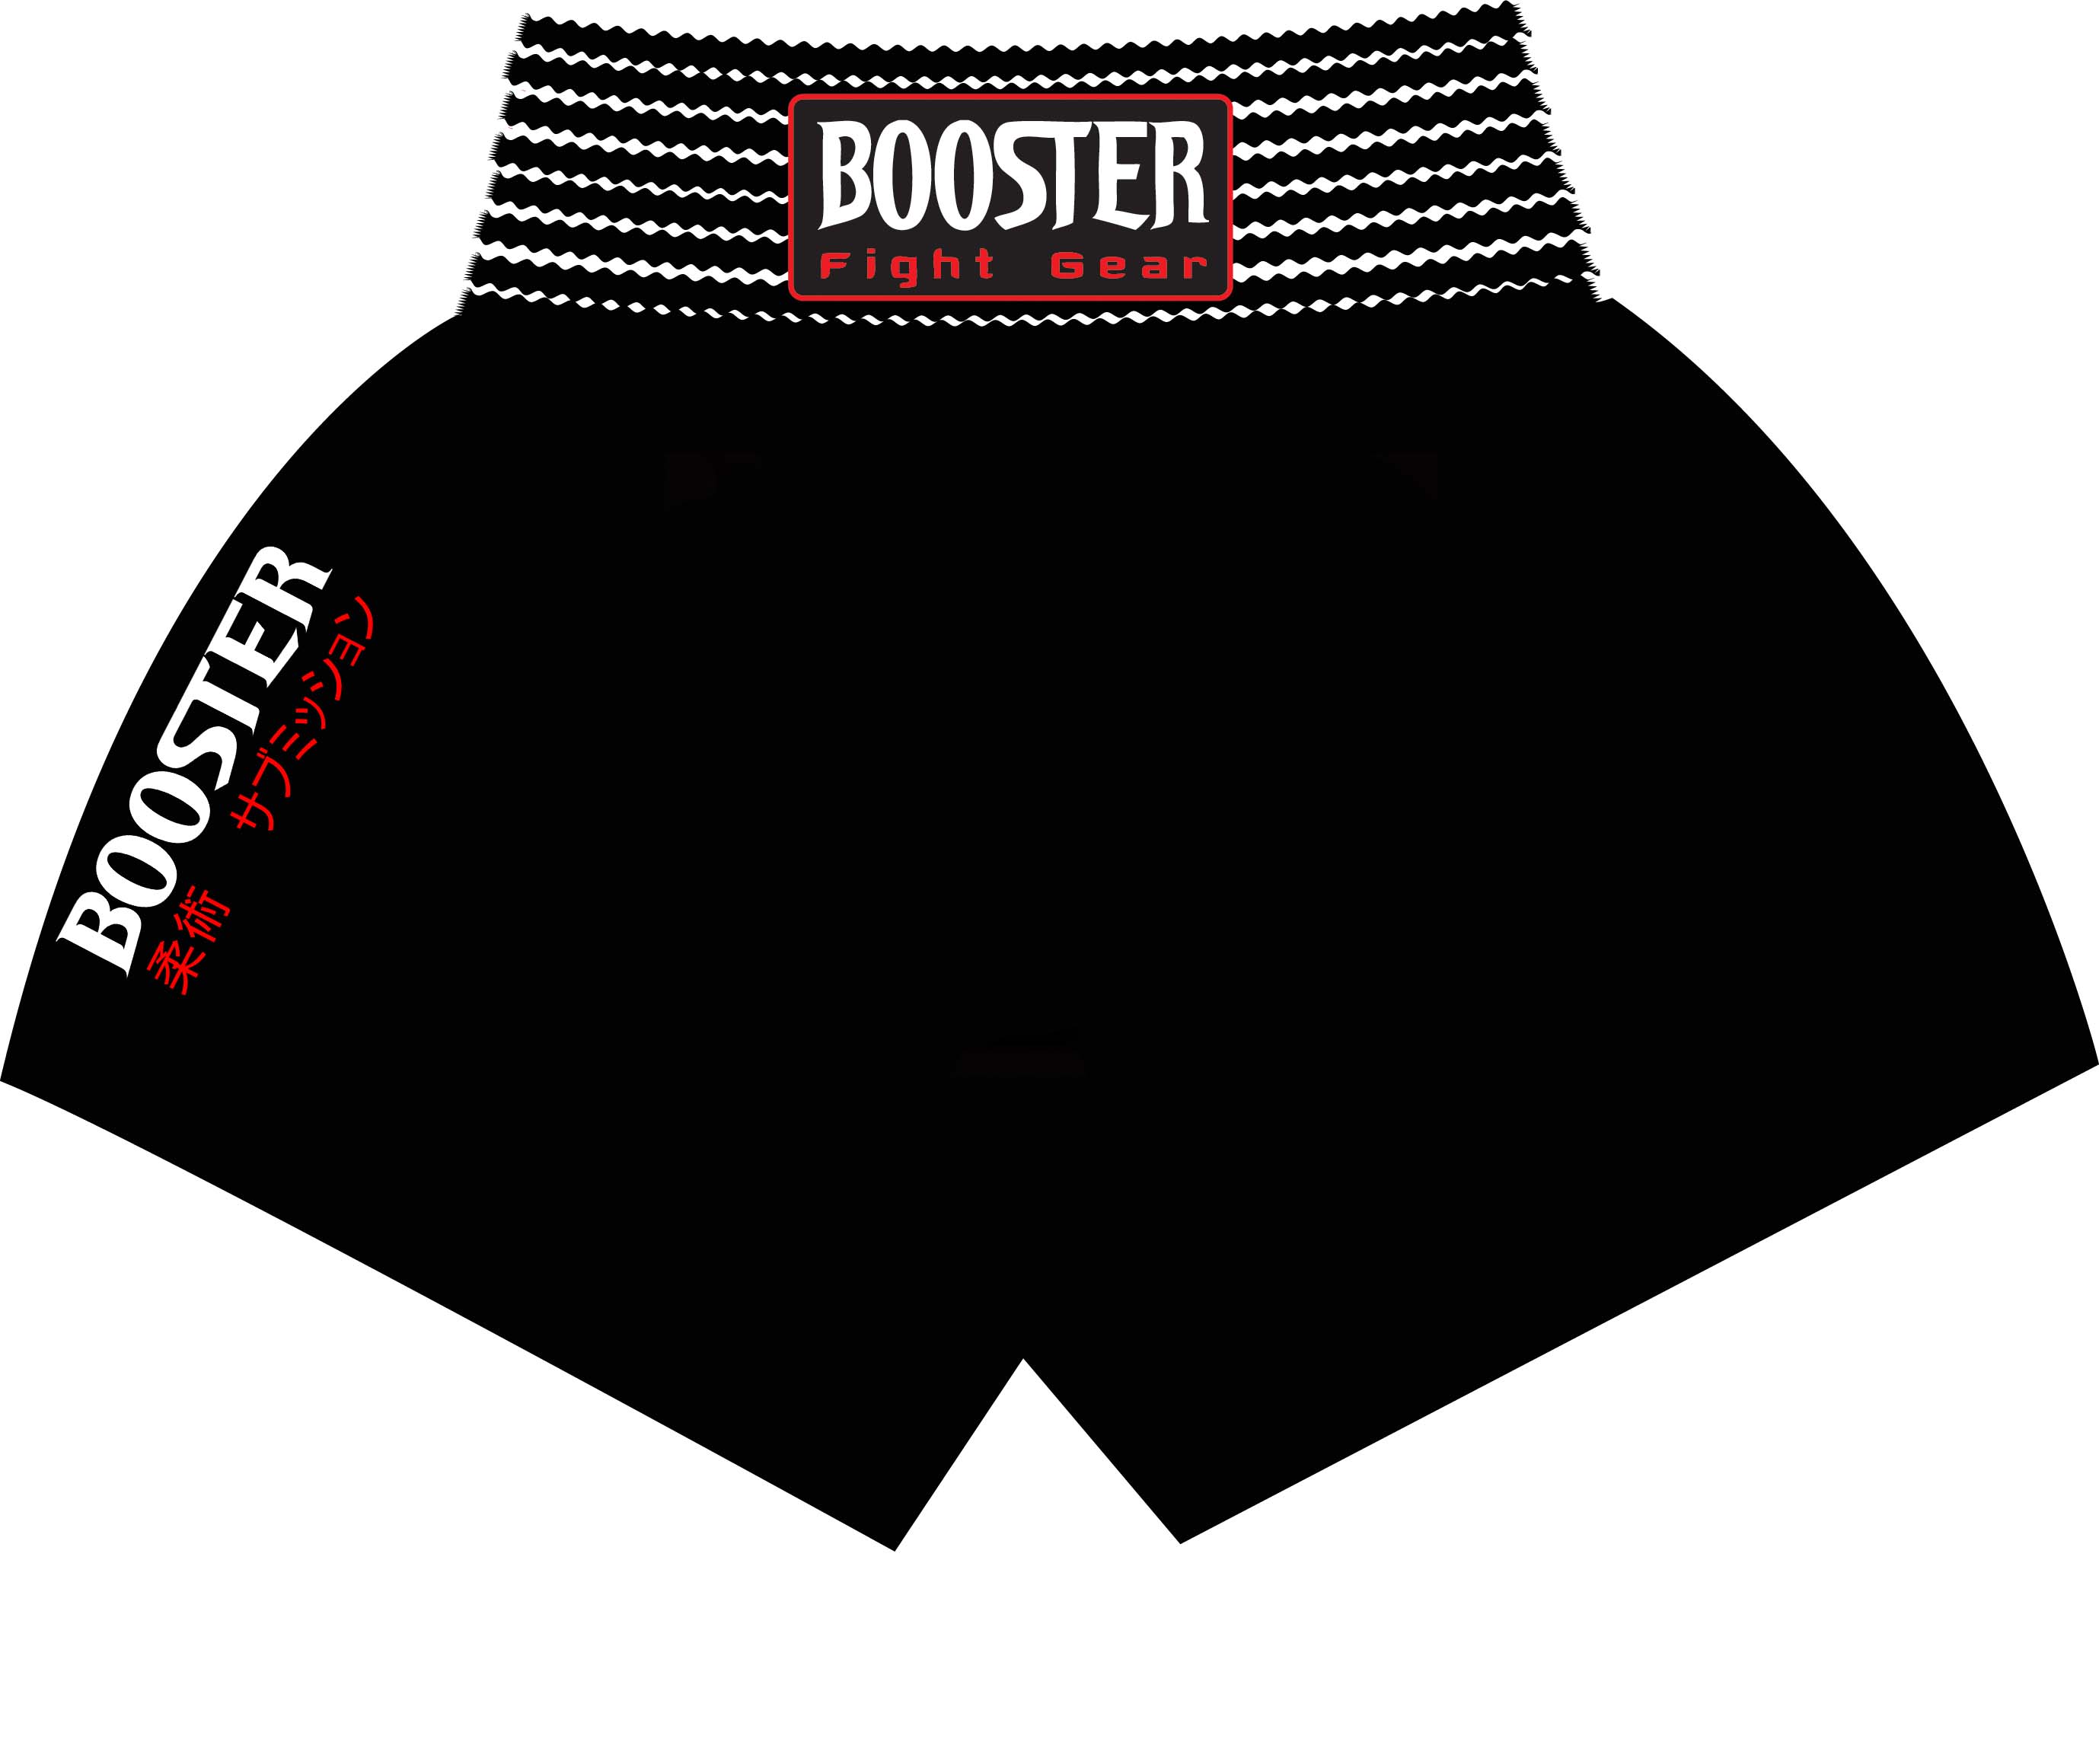 Booster  BTT 2 Muay Thai short - XL